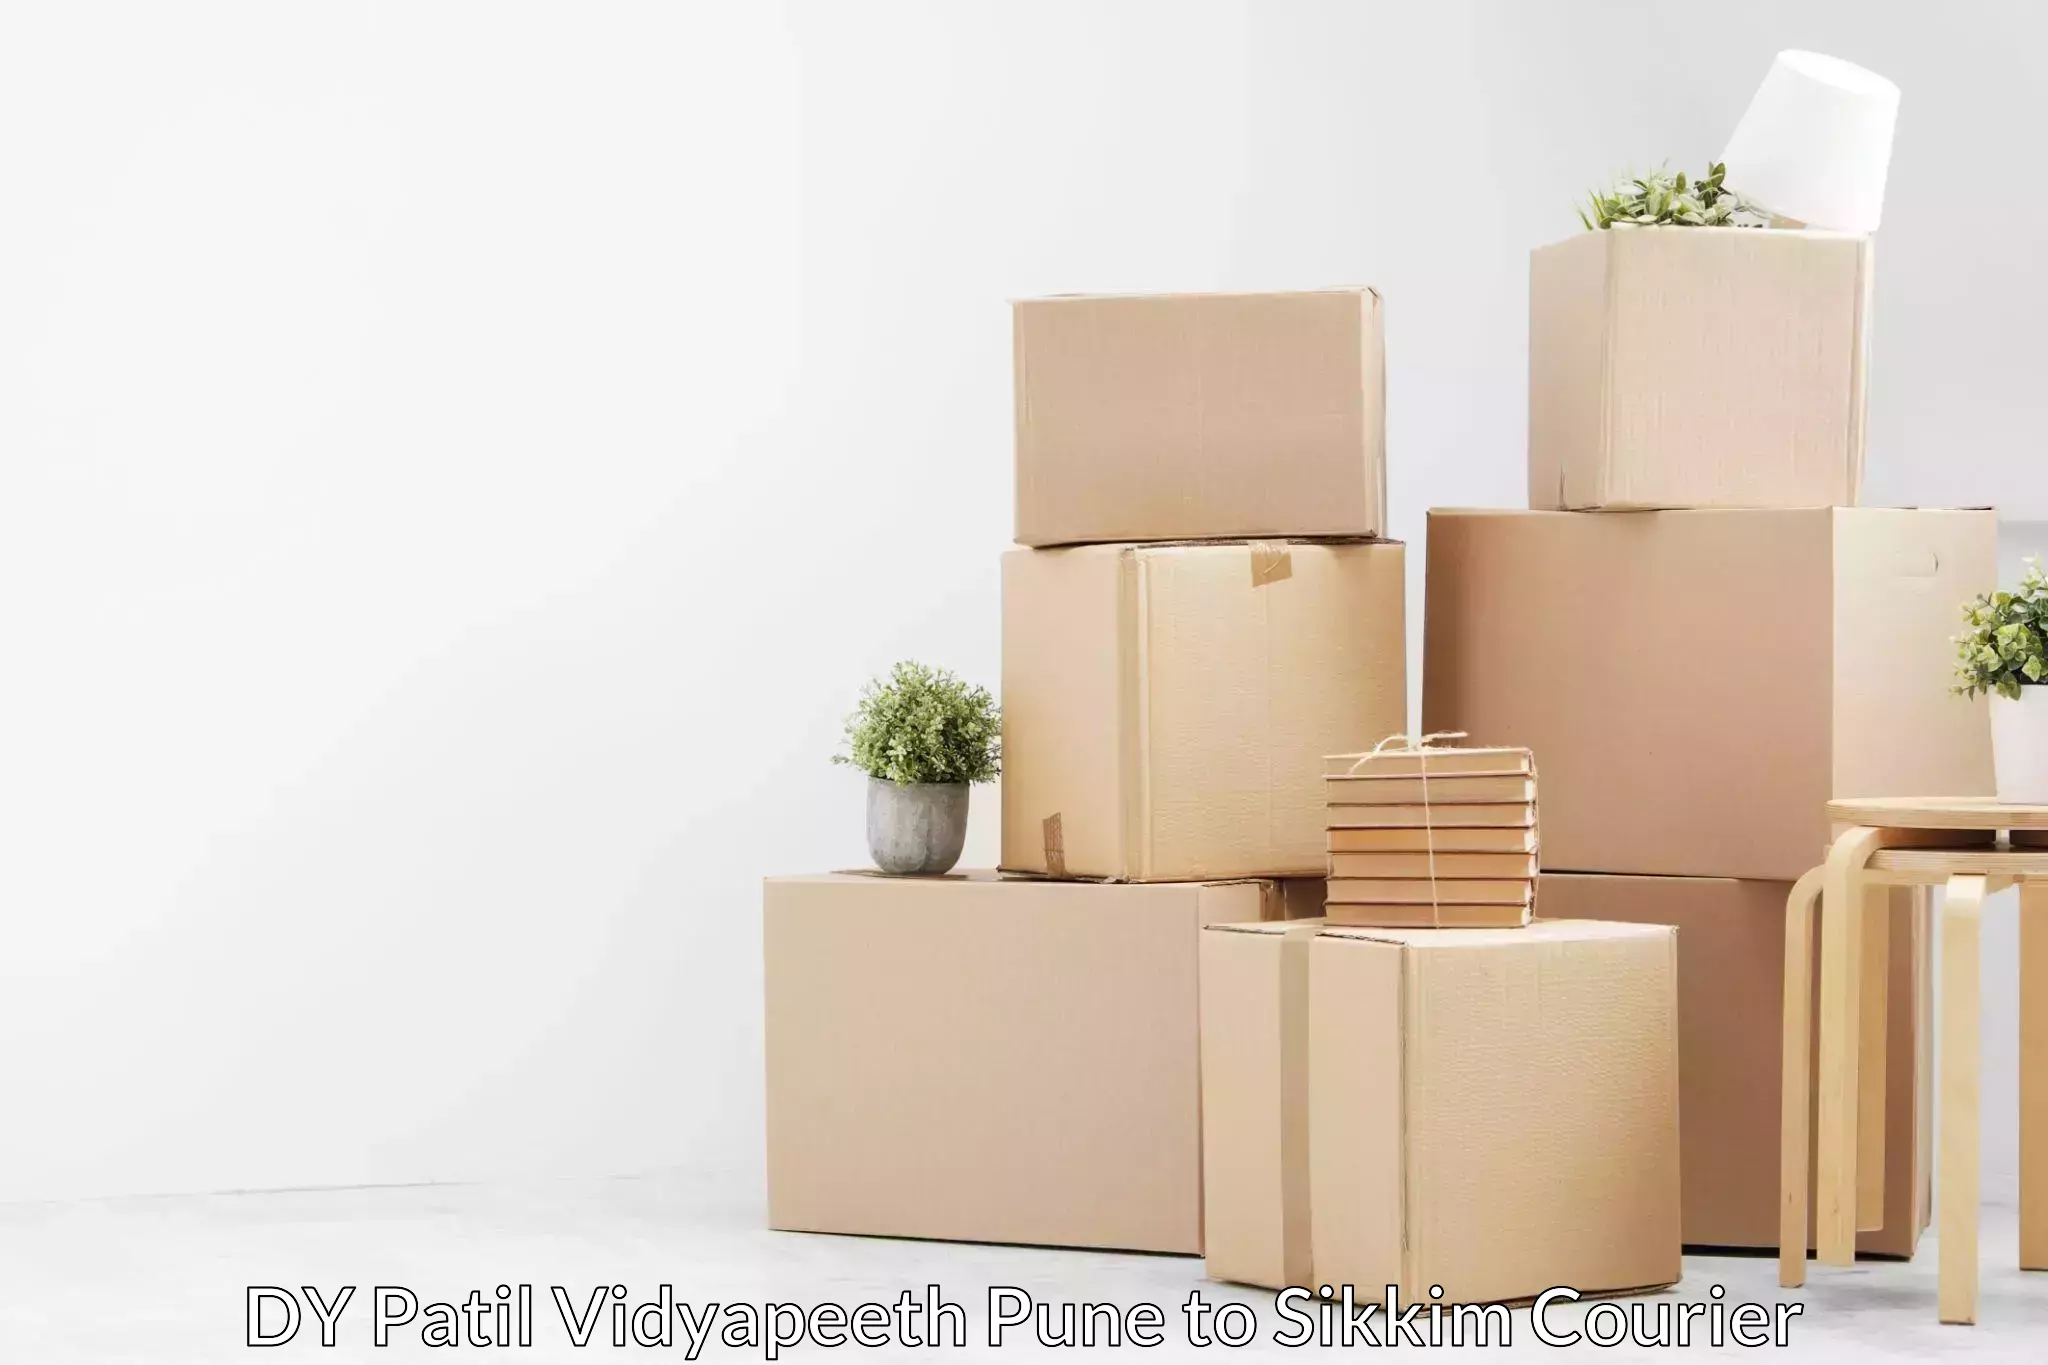 Professional moving company DY Patil Vidyapeeth Pune to Namchi